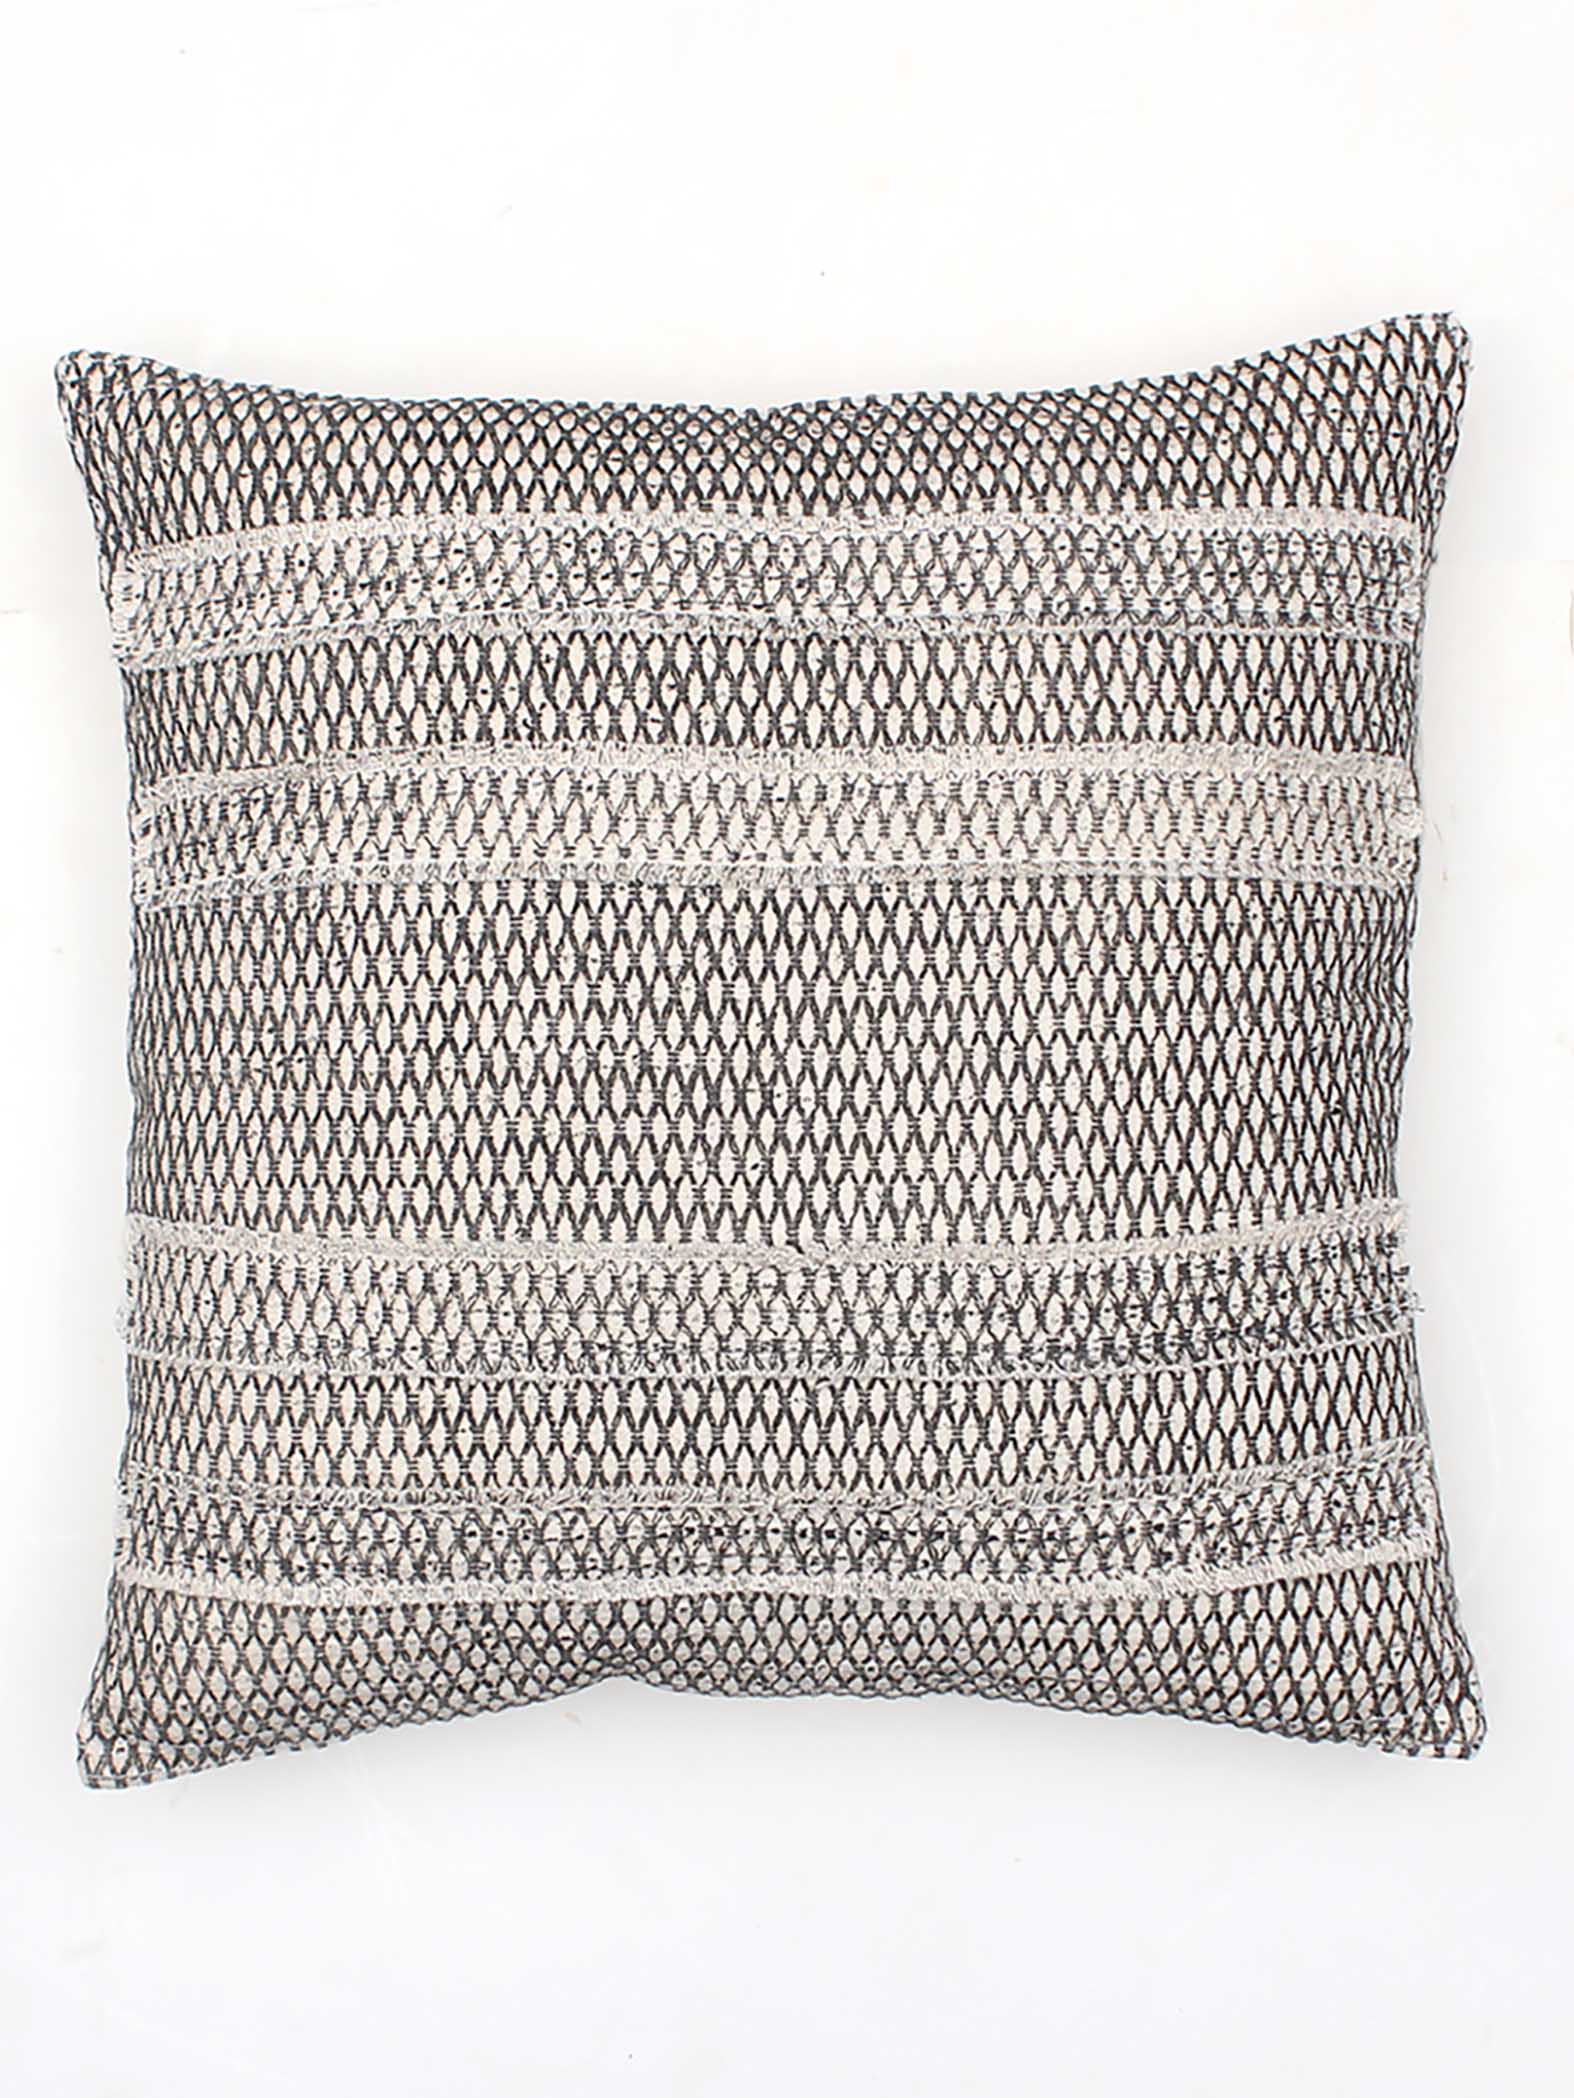 Grey Hammock Beach Cushion Cover By House This